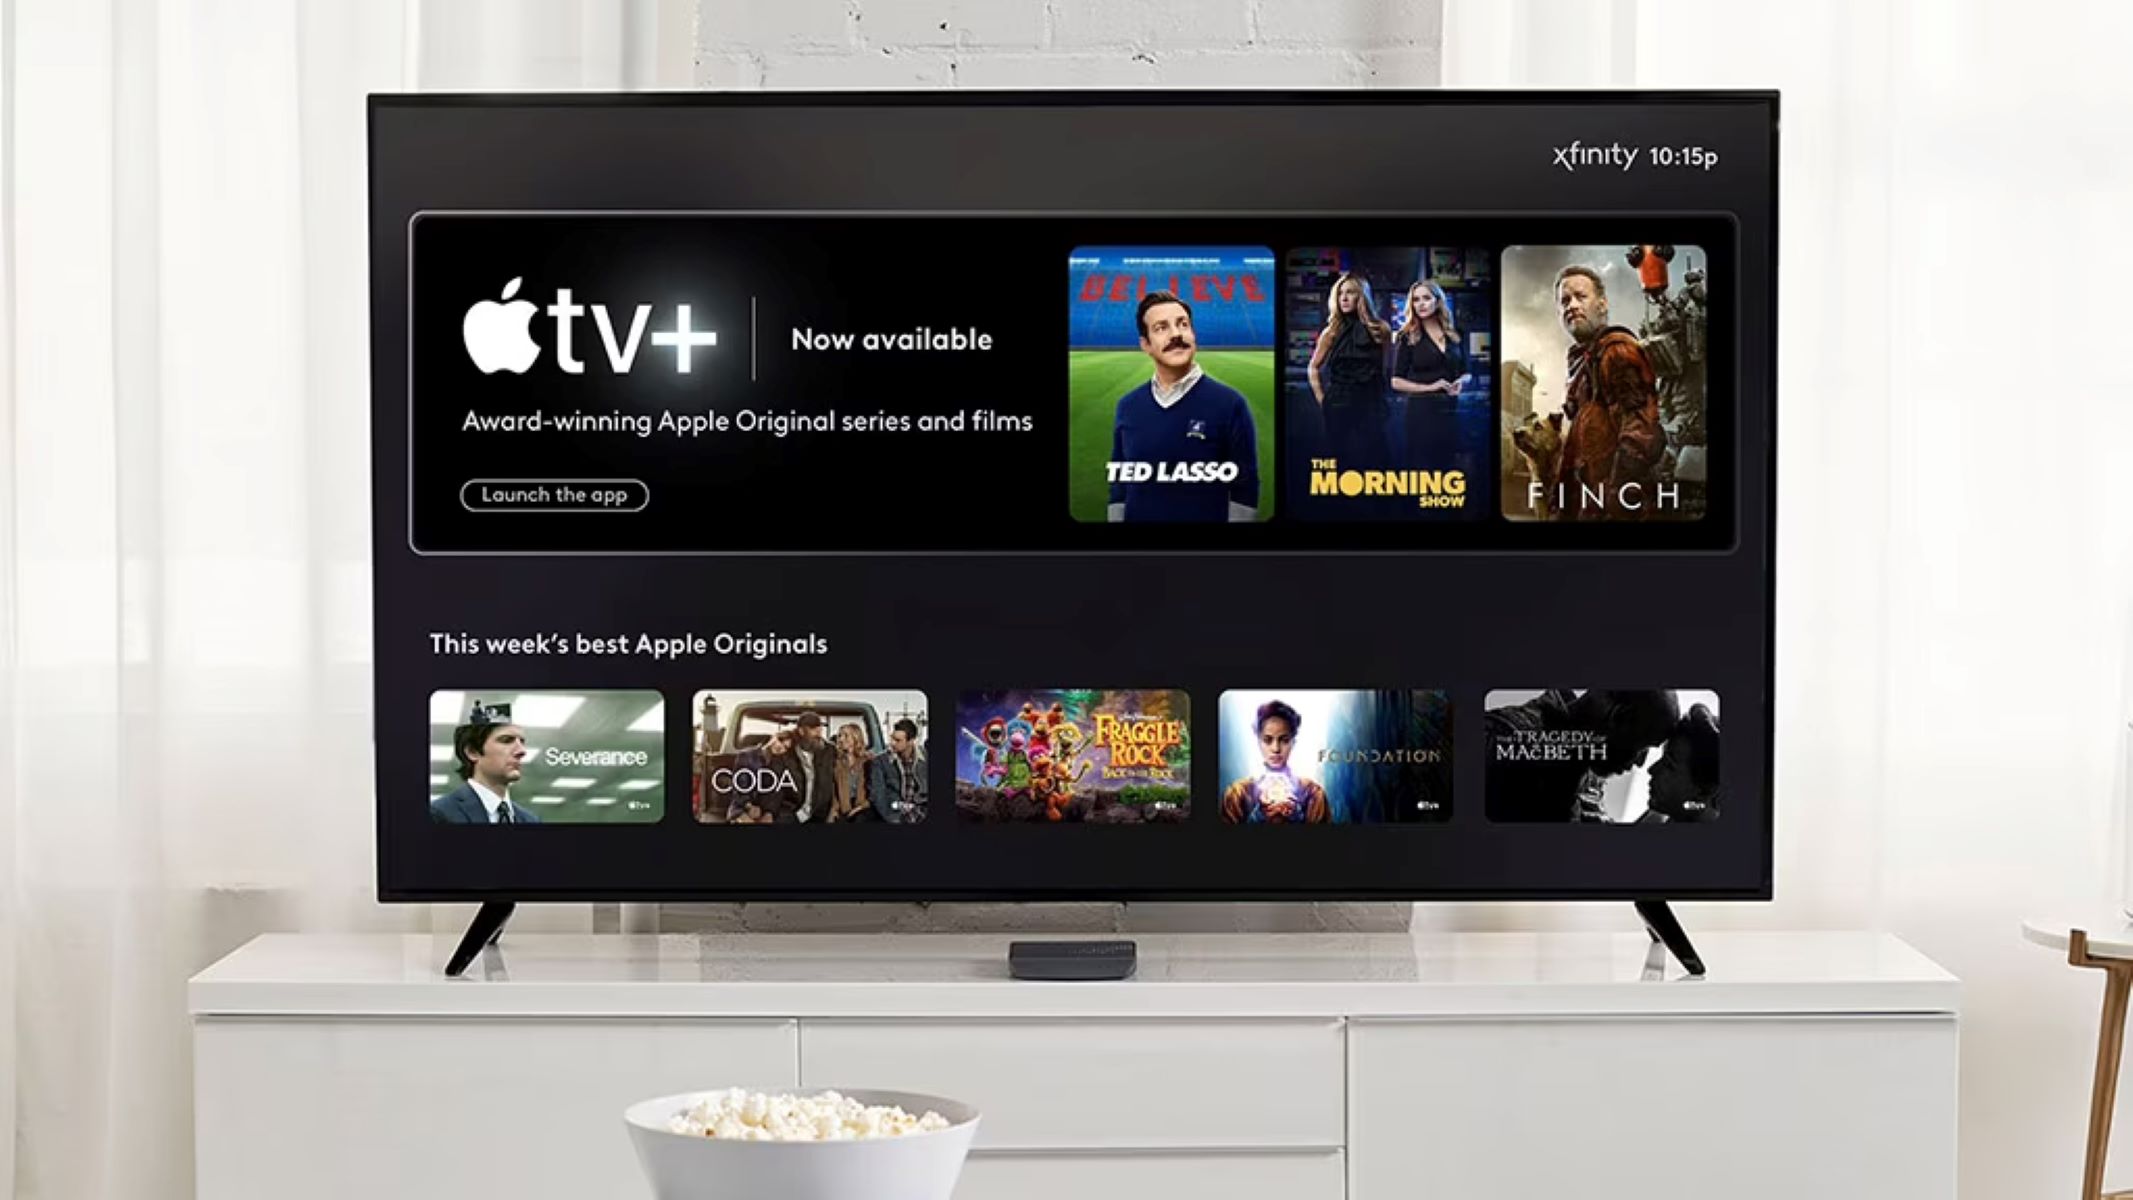 How To Watch Apple TV On Xfinity